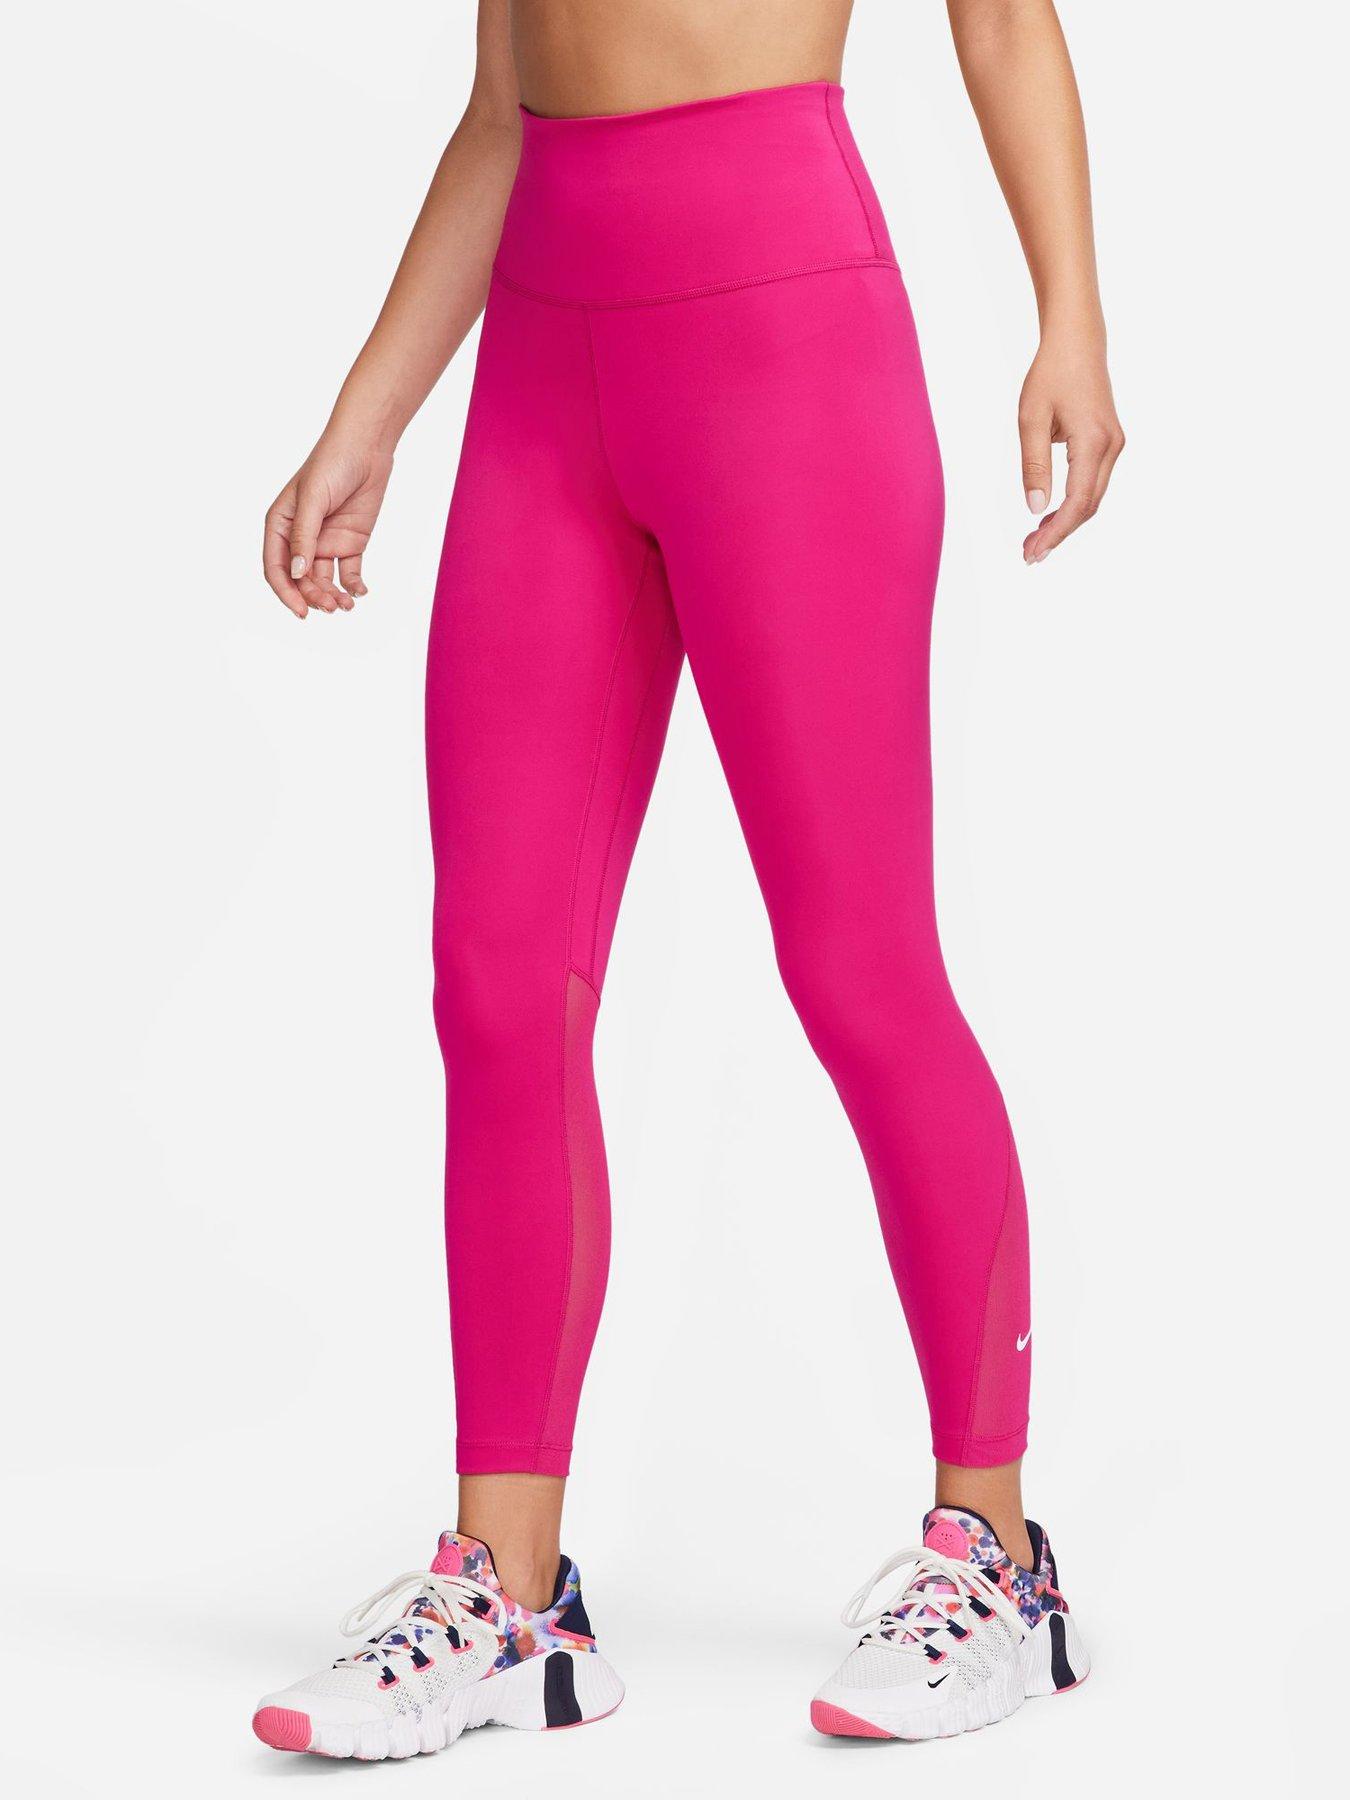 Nike Nike Pro Training 365 High Waisted leggings in Pink